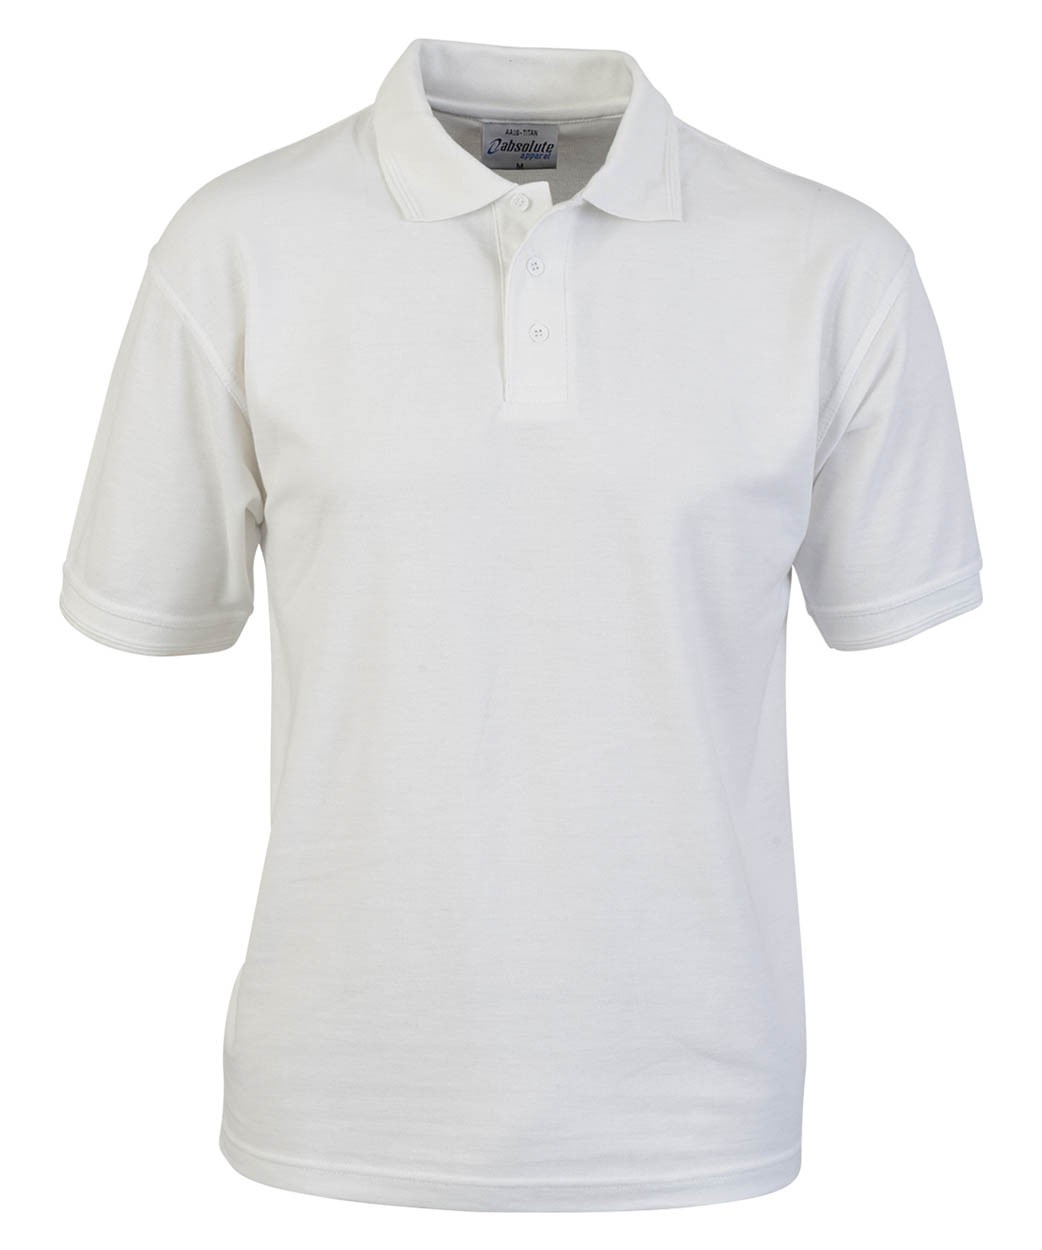 Absolute Apparel AA16 Titan Polo - Plain Poly Cotton Polo Shirts -  PolyCotton Polo Shirts - Mens Polo Shirts - Polo Shirts - Leisurewear -  Best Workwear